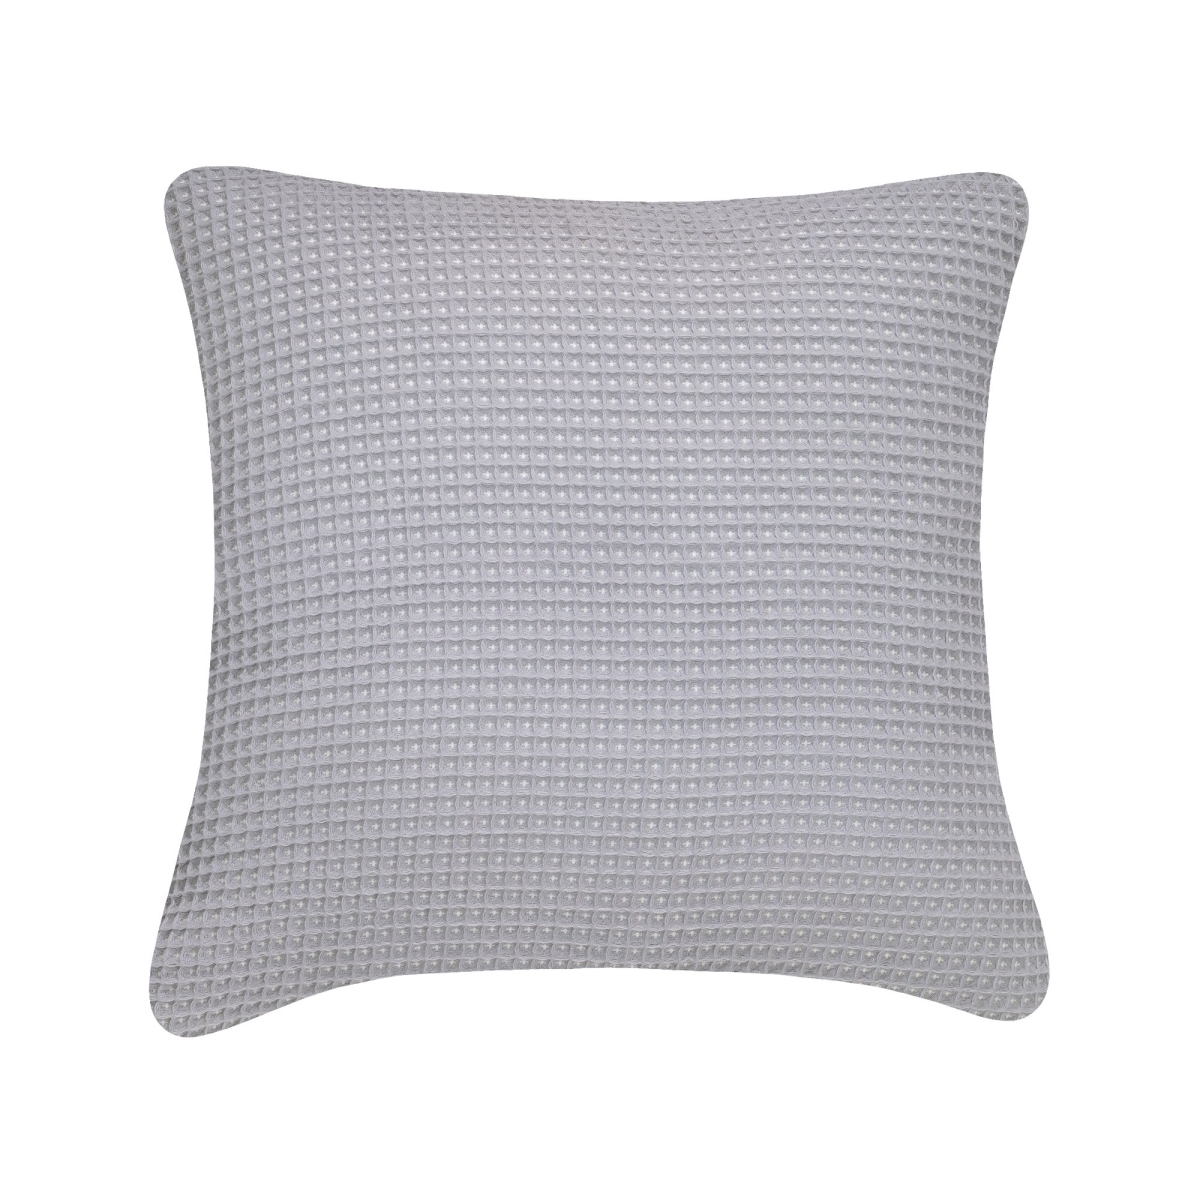 Sq-pi-wafwg-2020 20 X 20 In. Waffle Decorative Cushion, White & Grey - 100 Percent Polyester